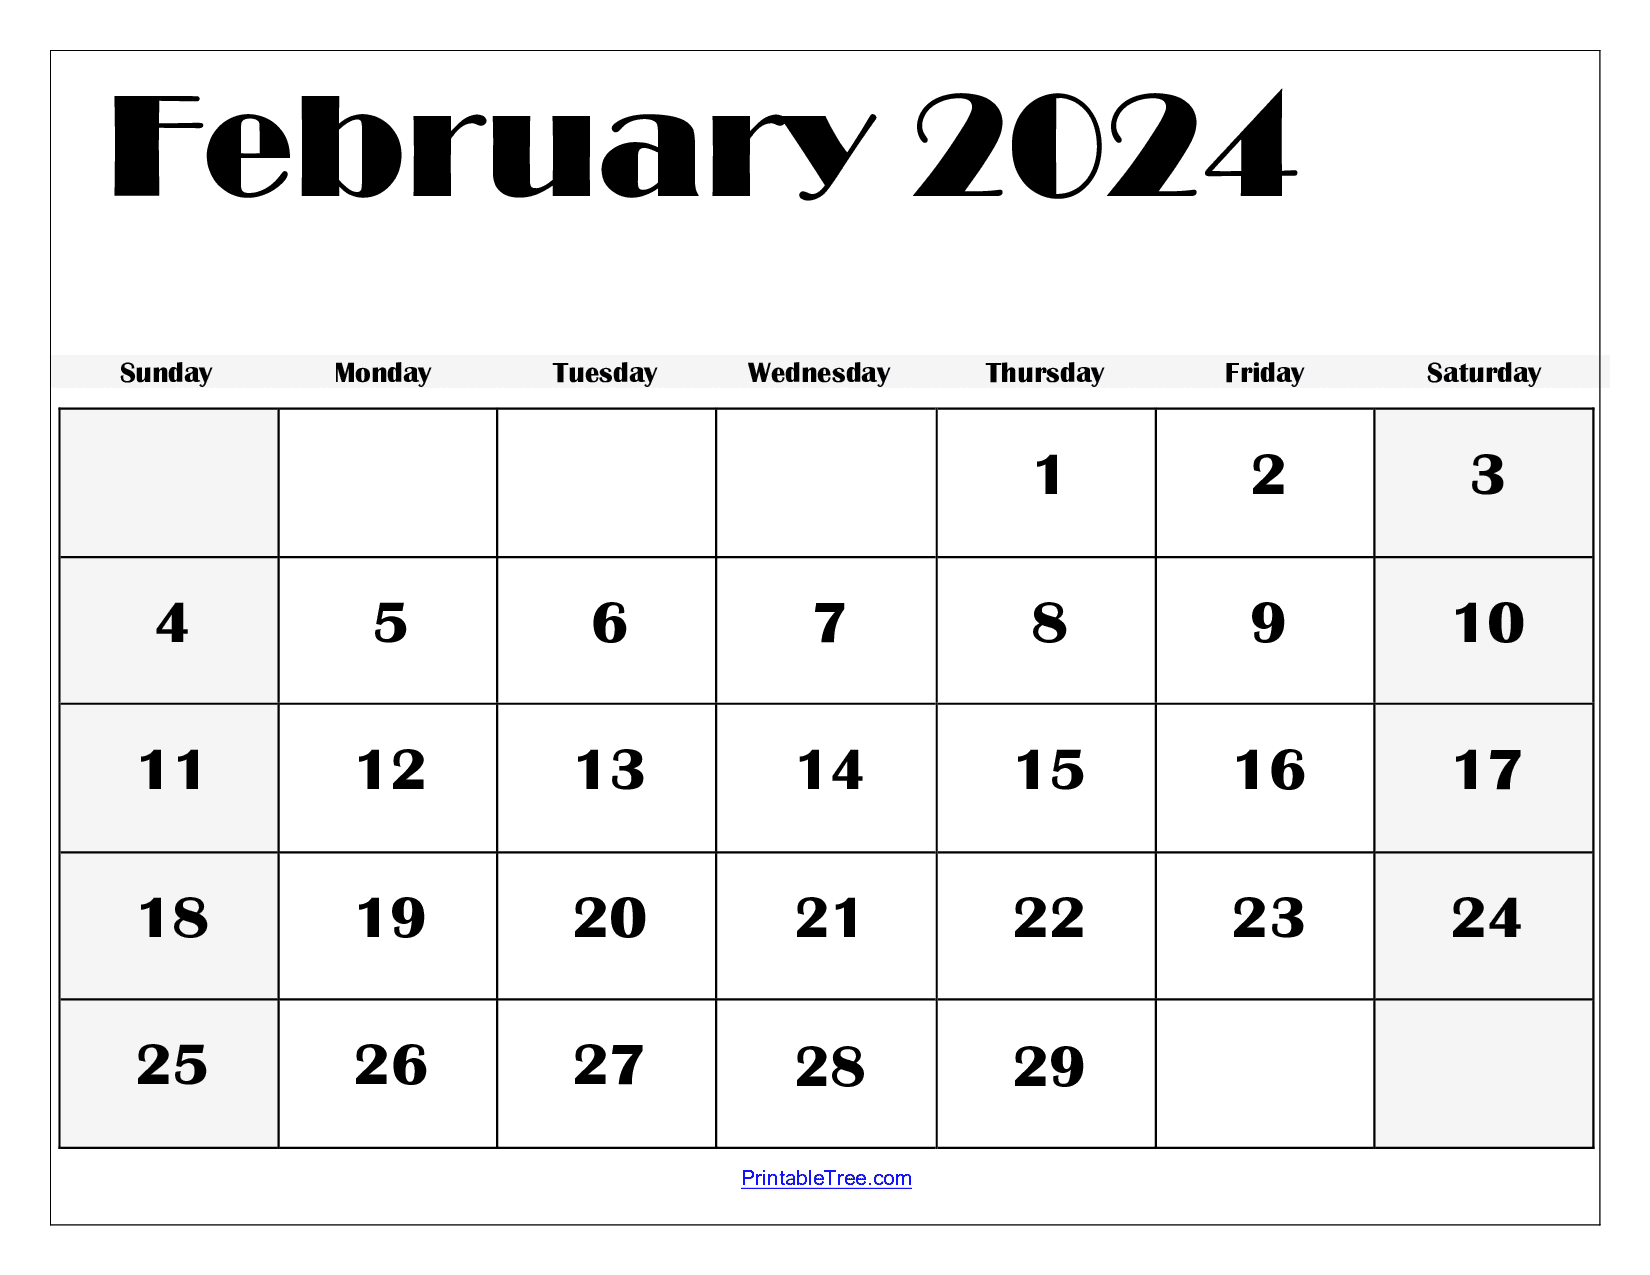 February 2024 Calendar Printable Pdf Template With Holidays for Printable Feb 2024 Calendar